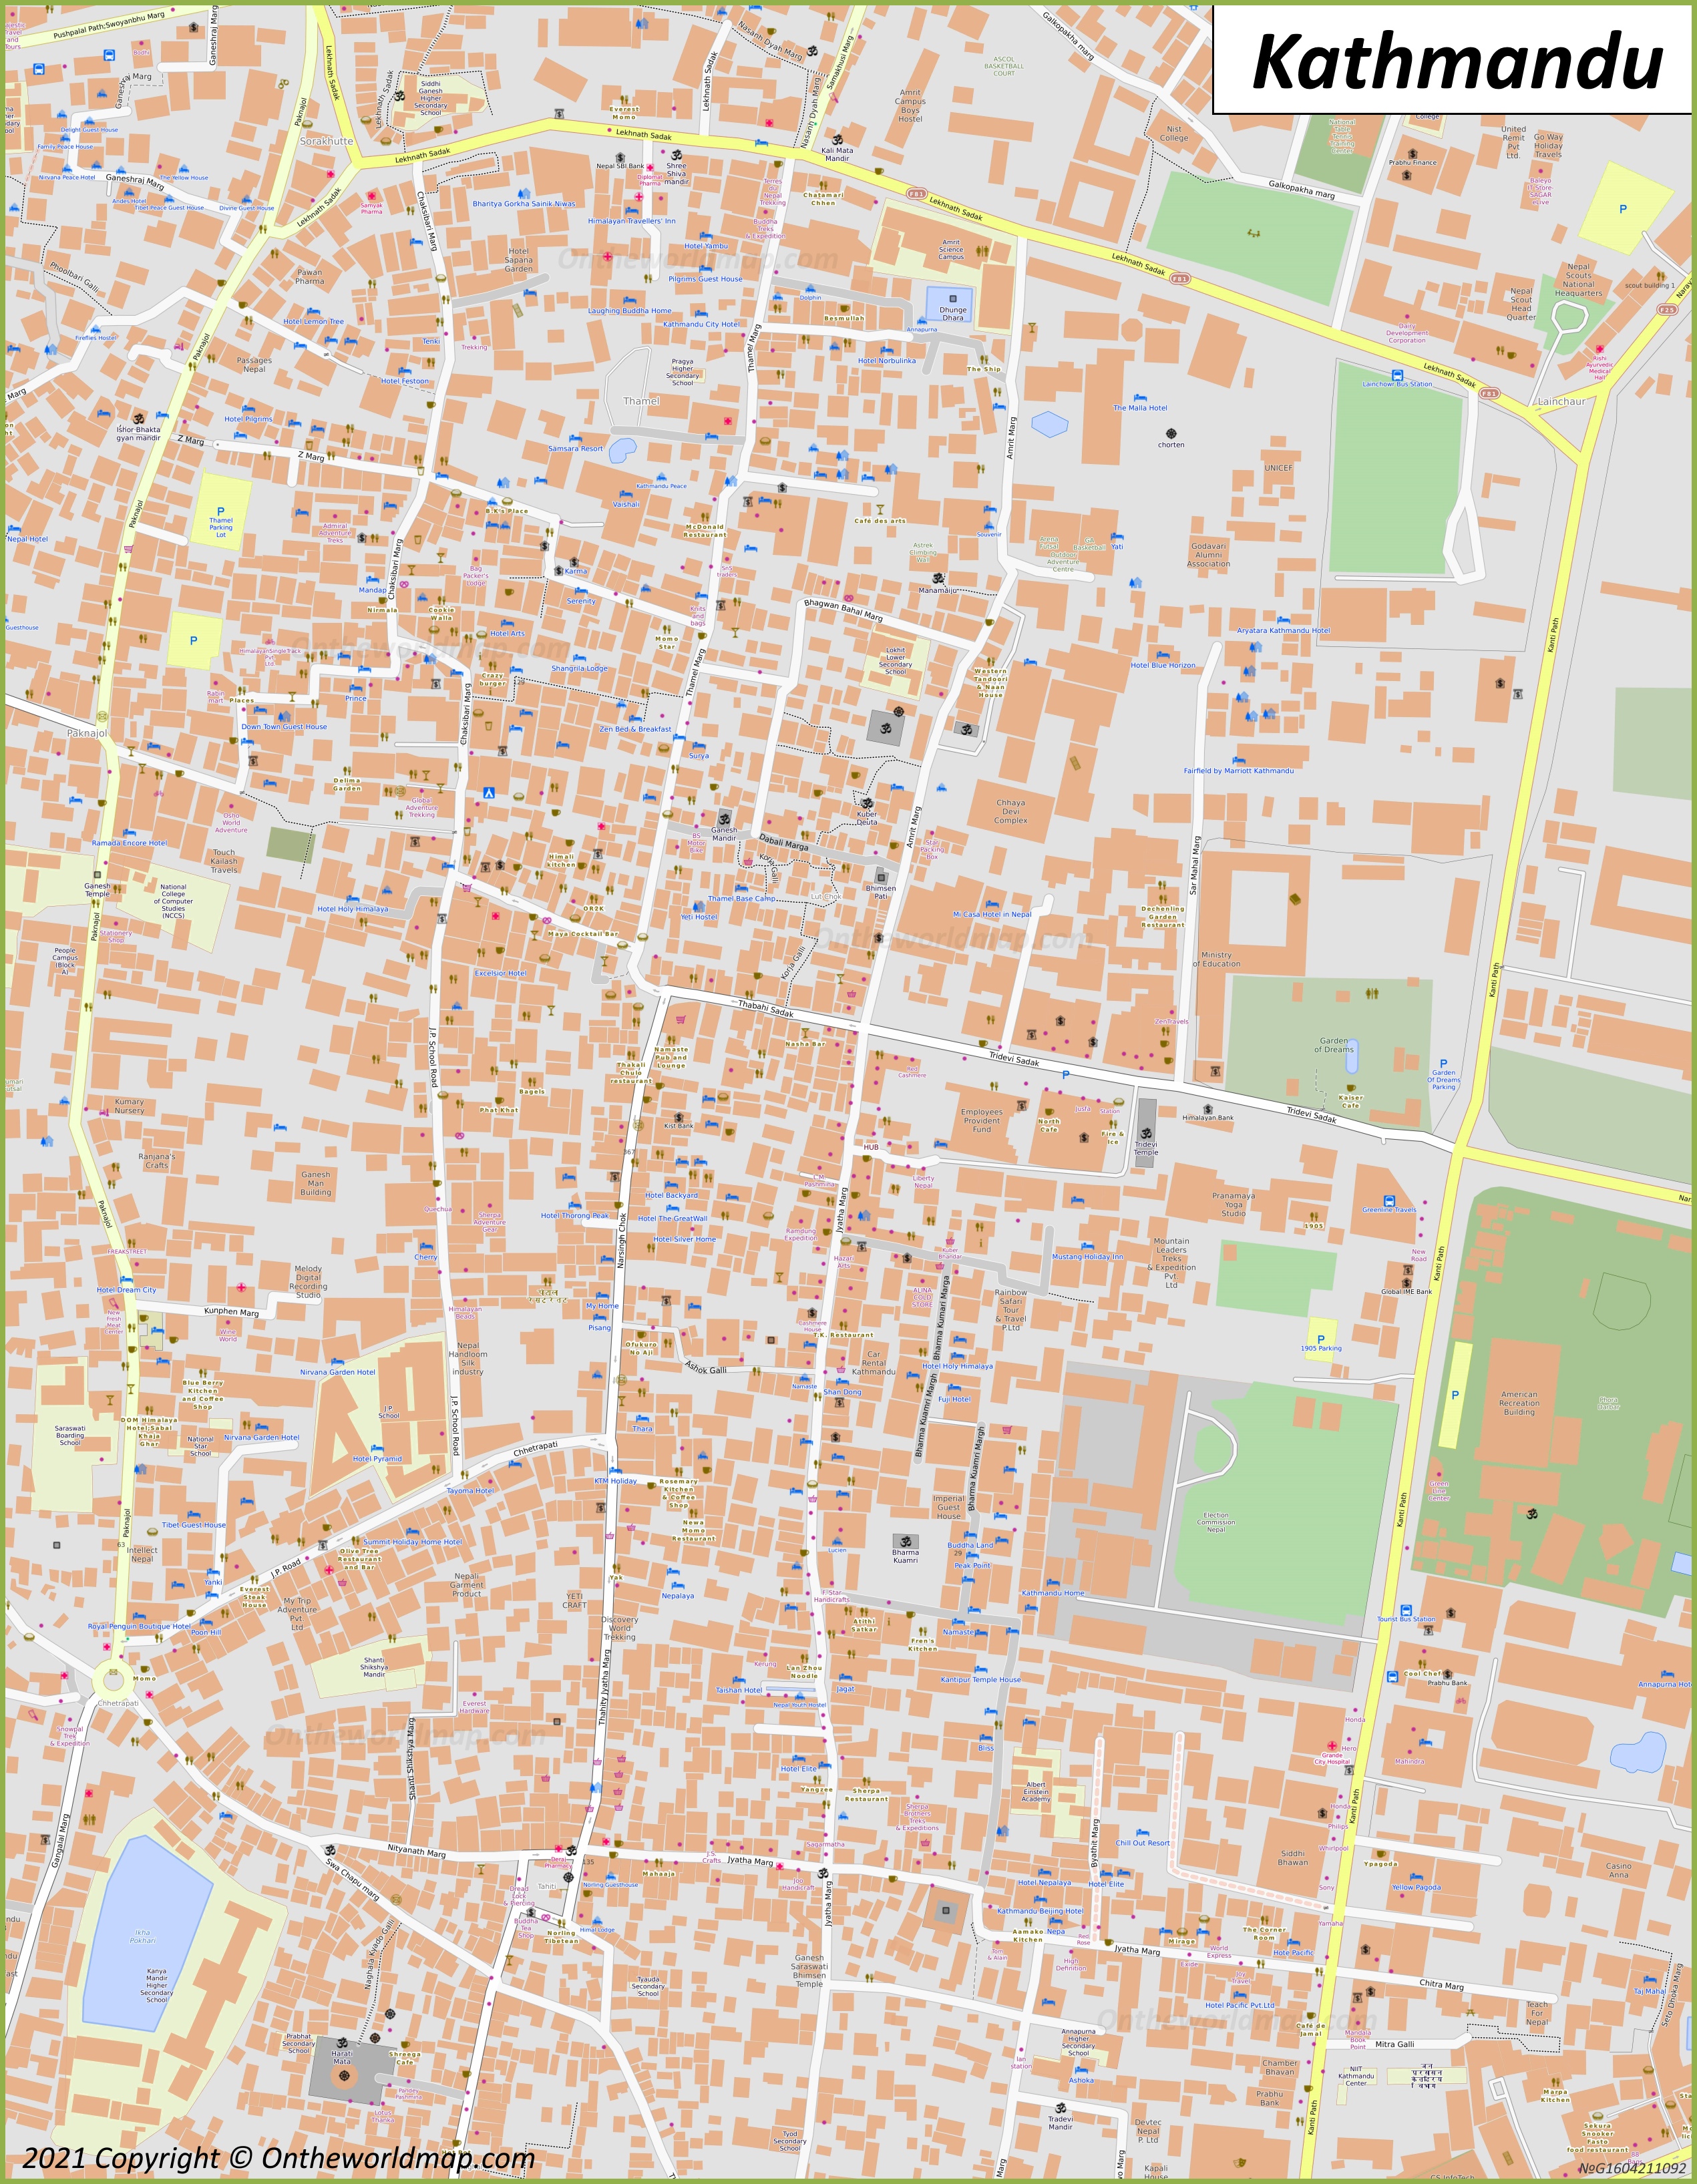 Kathmandu City Center Map